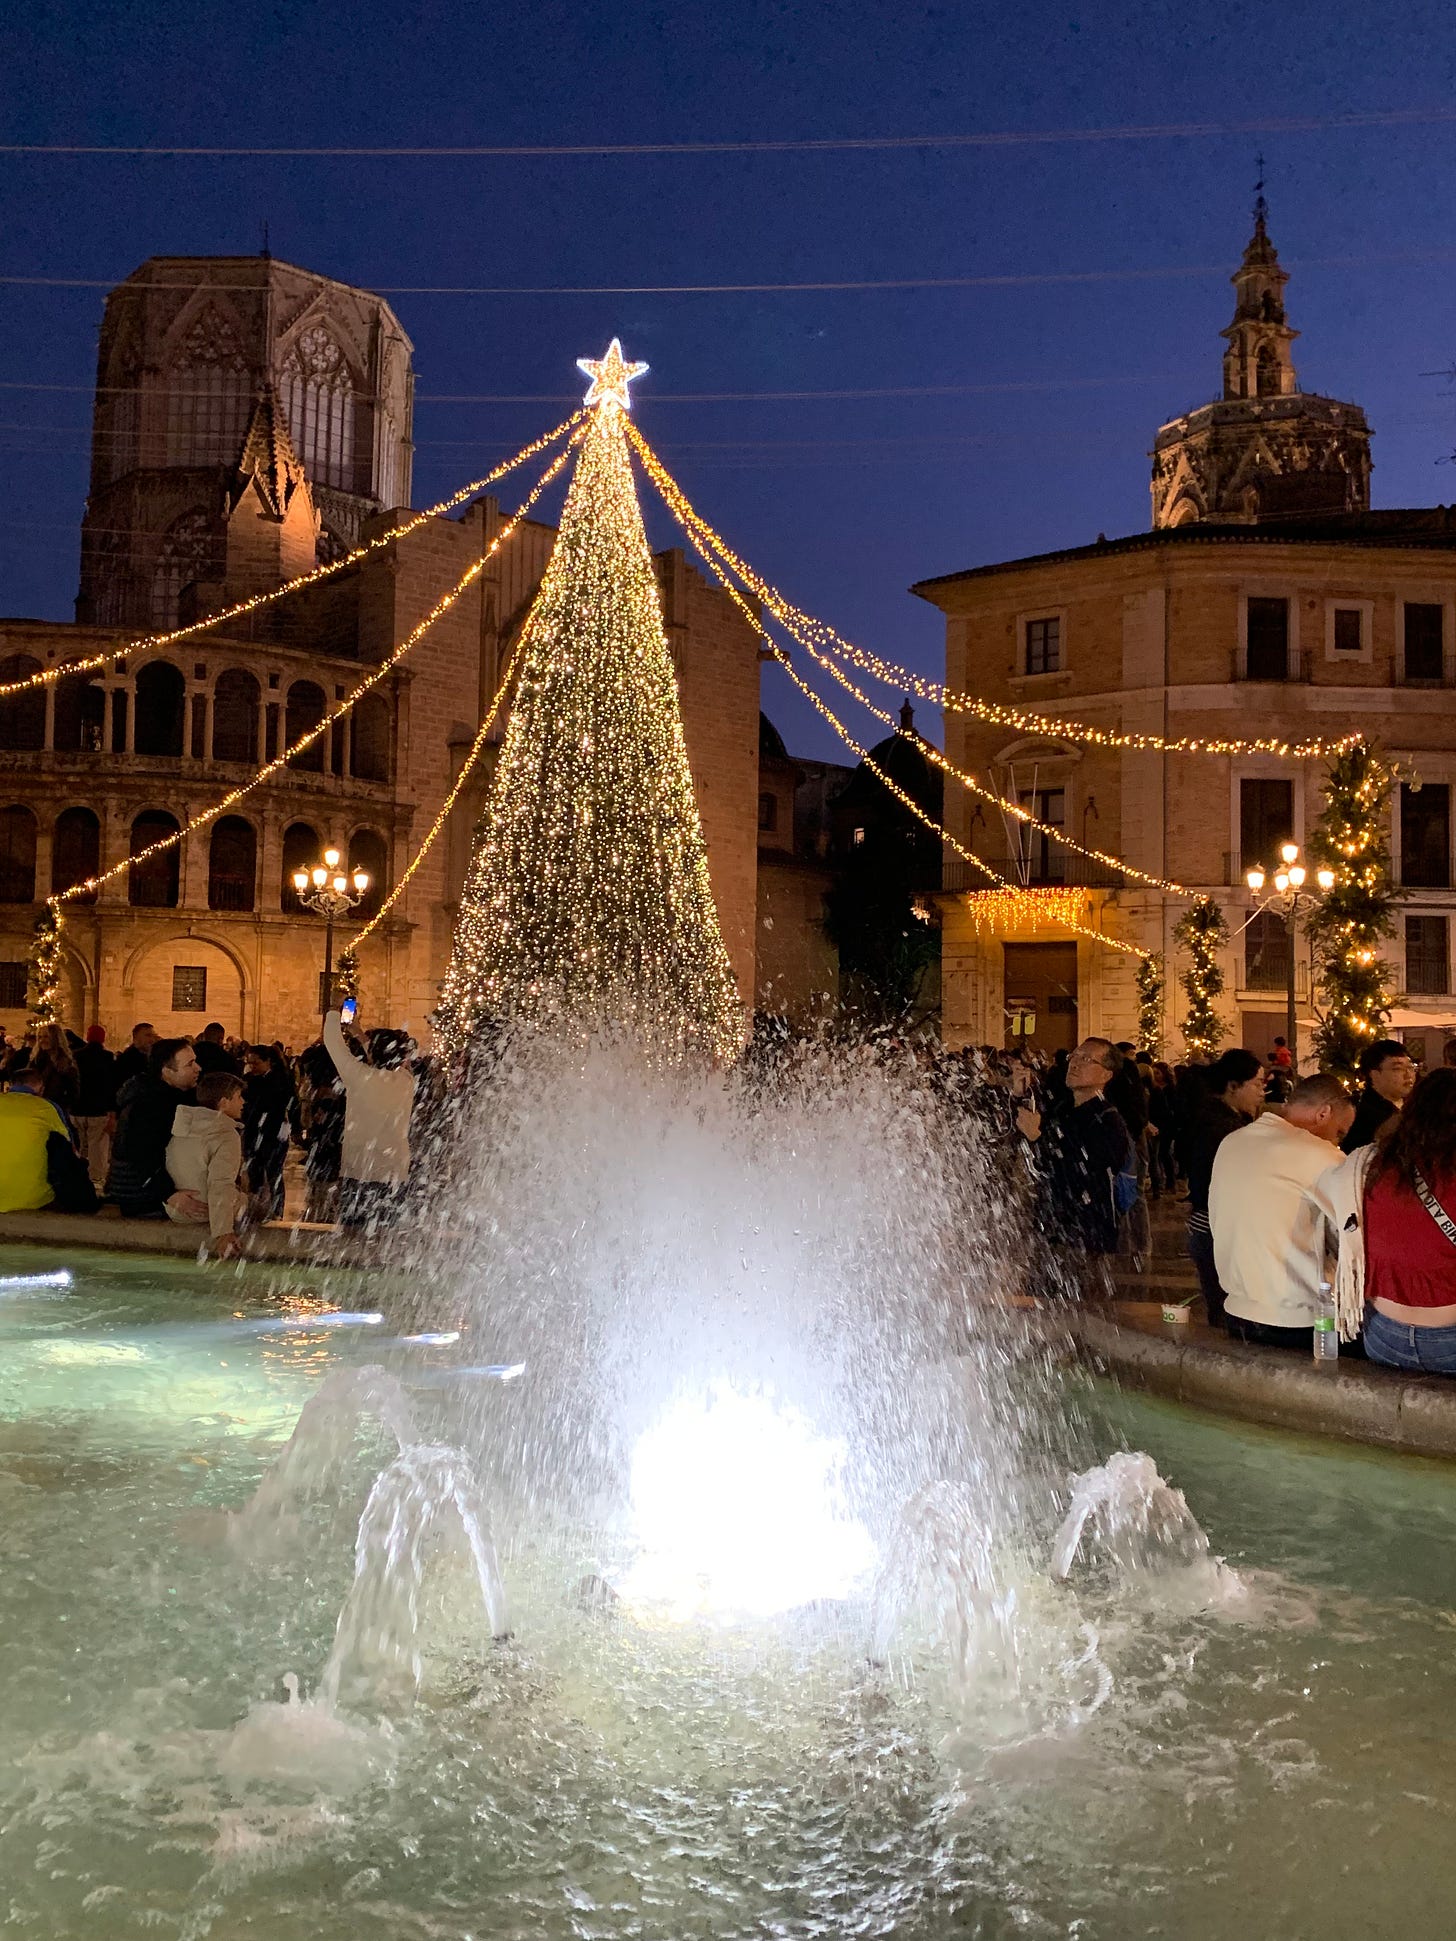 The Plaza de Virgin has a giant Christmas tree of lights